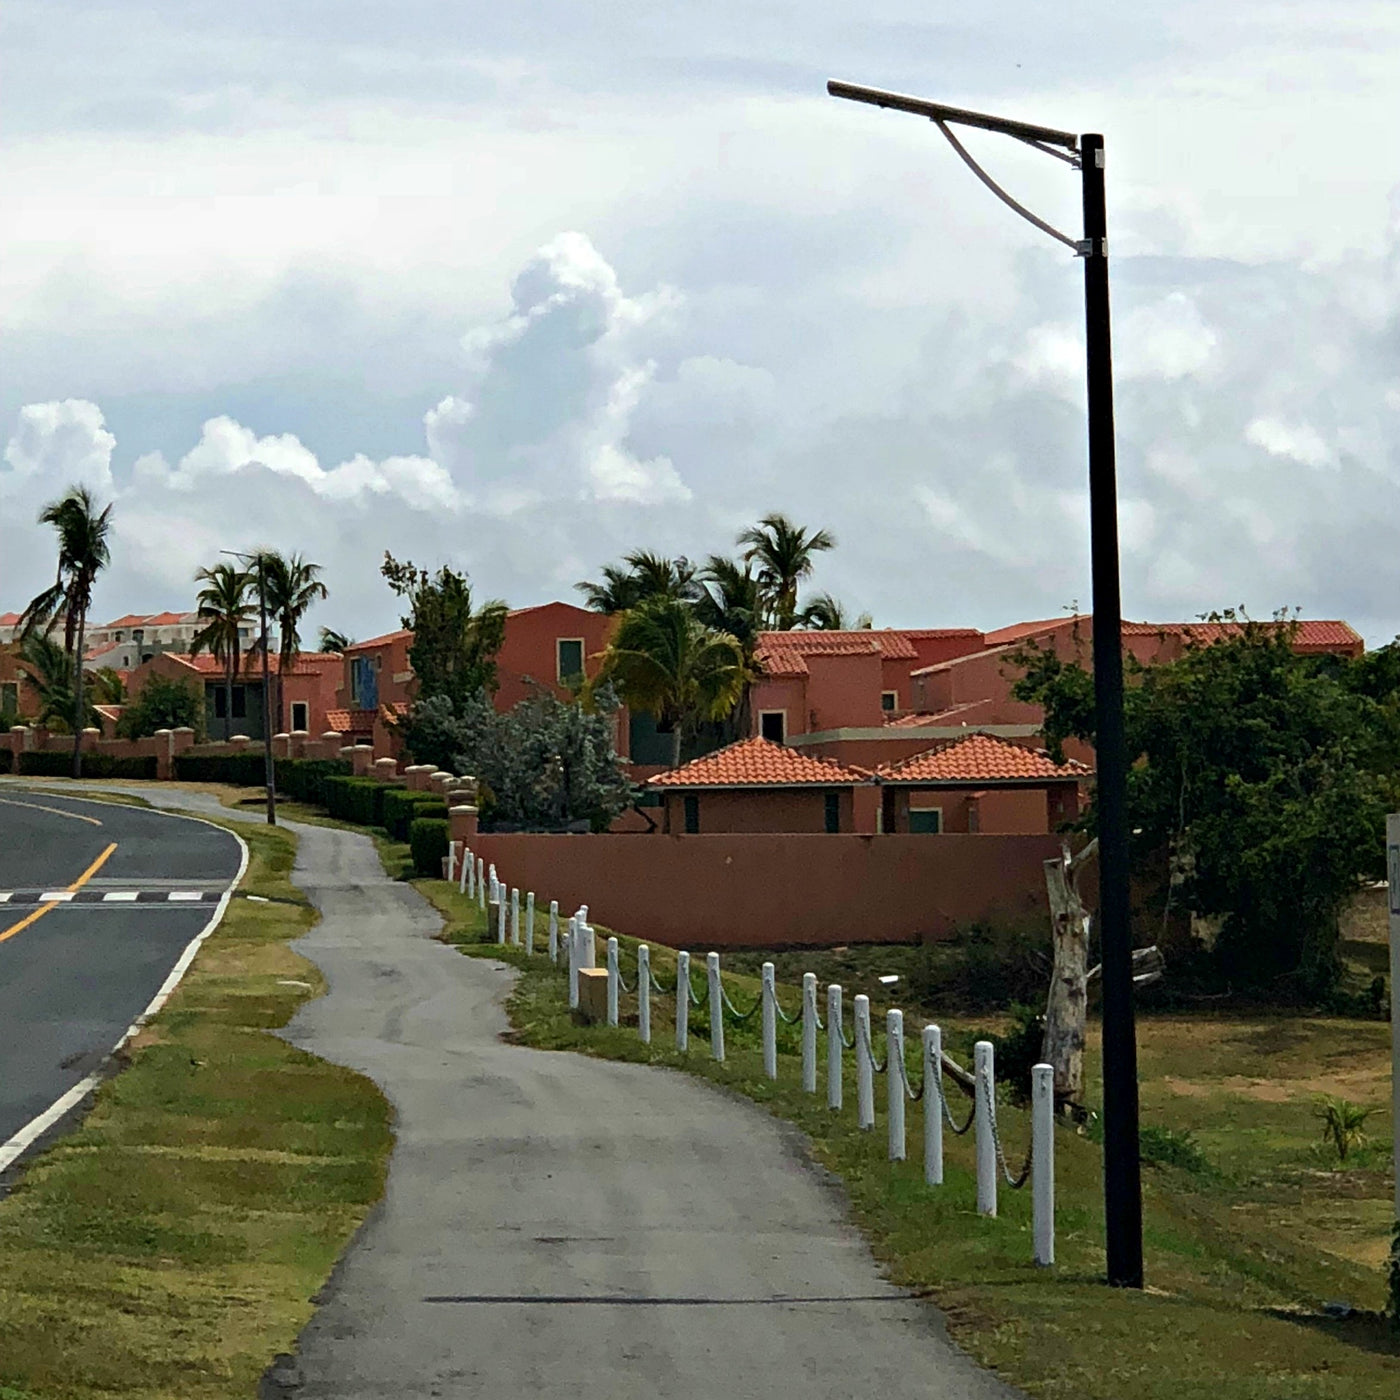 Fiberglass Light Poles for Sidewalks & Roadways in Puerto Rico